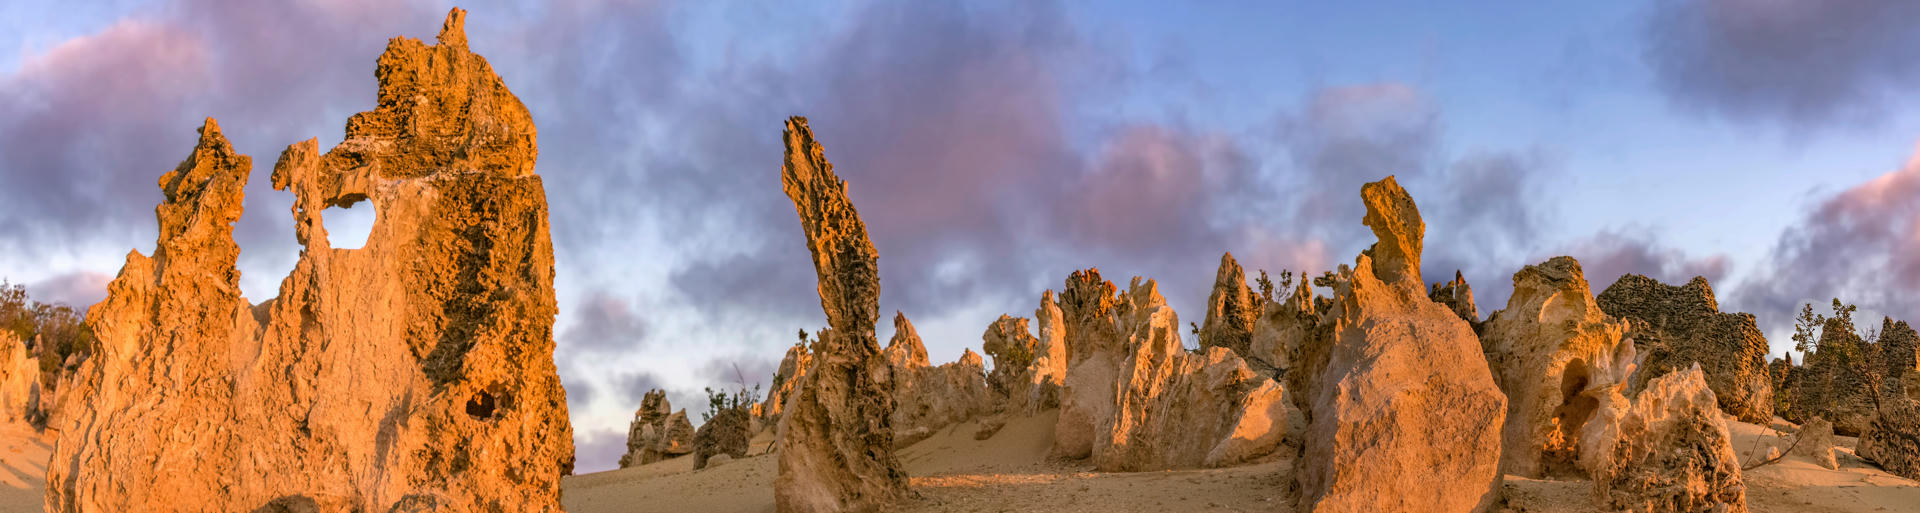 Nambung Pinnacles in Westaustralien